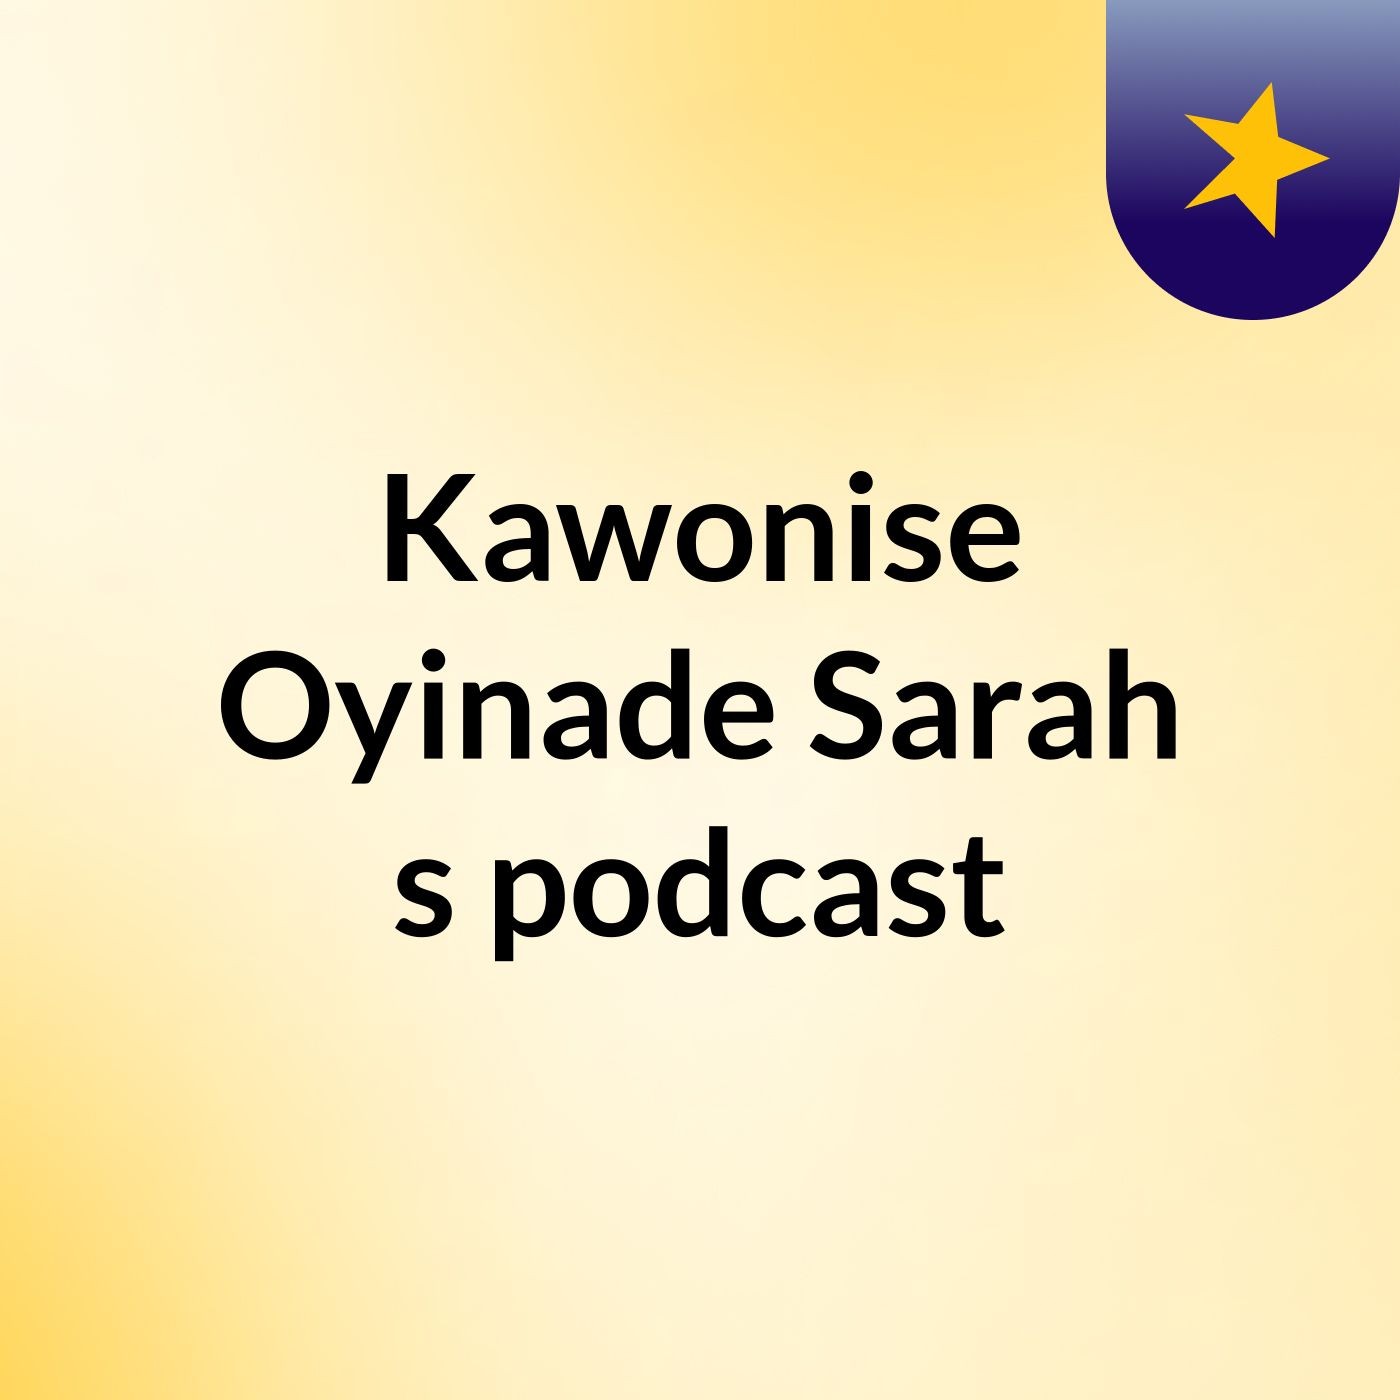 Kawonise Oyinade Sarah's podcast